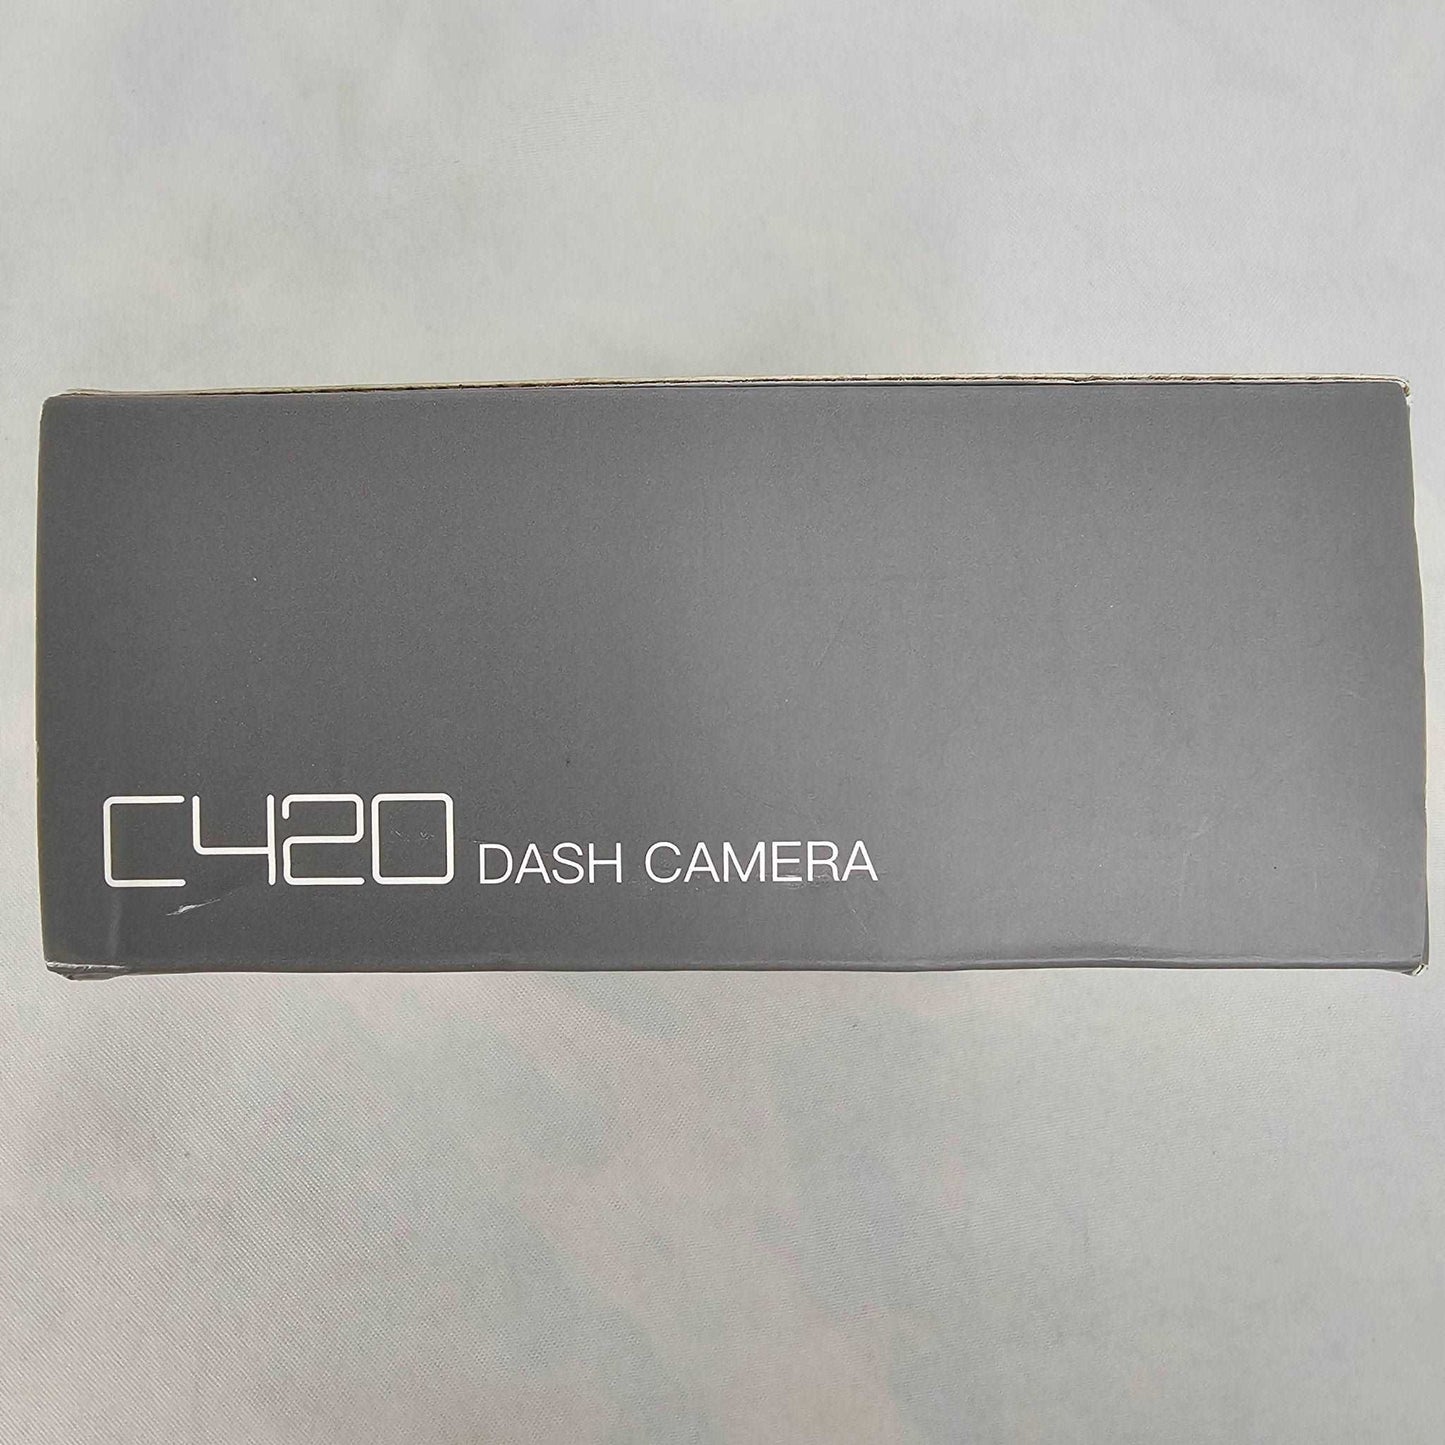 Dash Camera 1080P Full HD 170 Wide Angle Apeman C420 - DQ Distribution